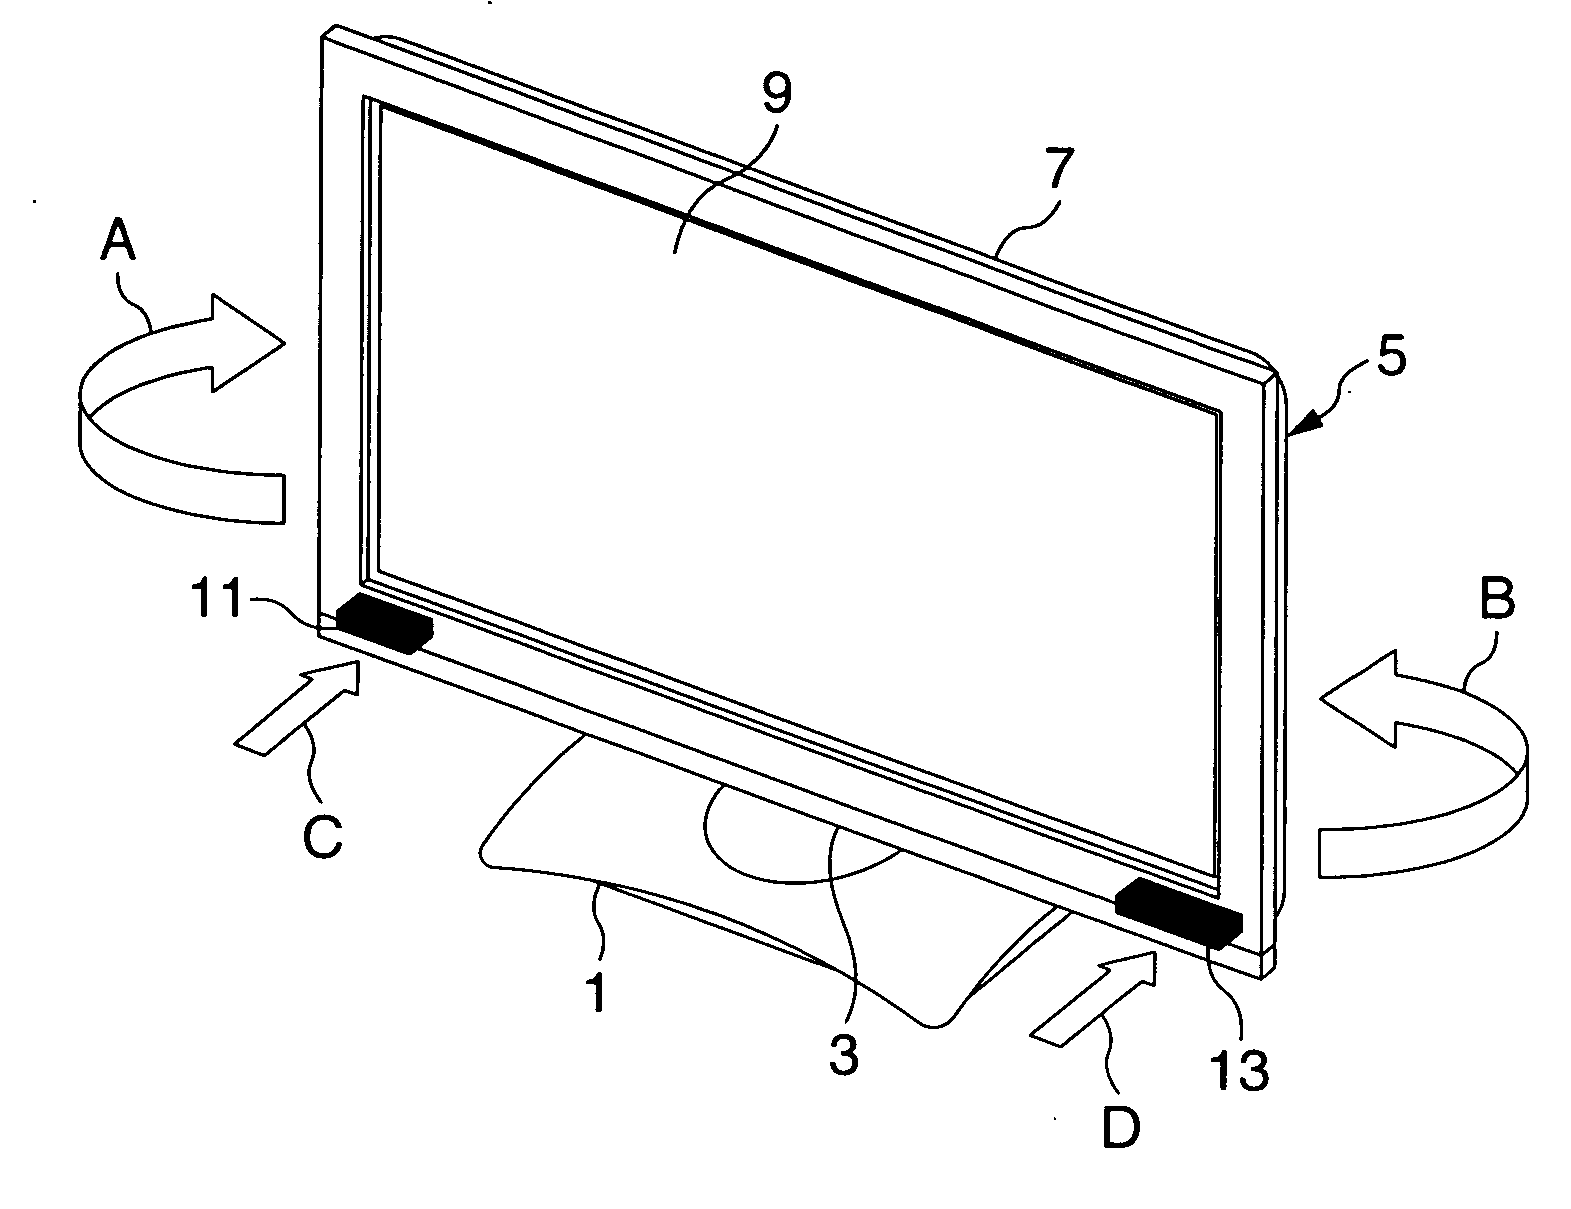 Display apparatus having turnable display